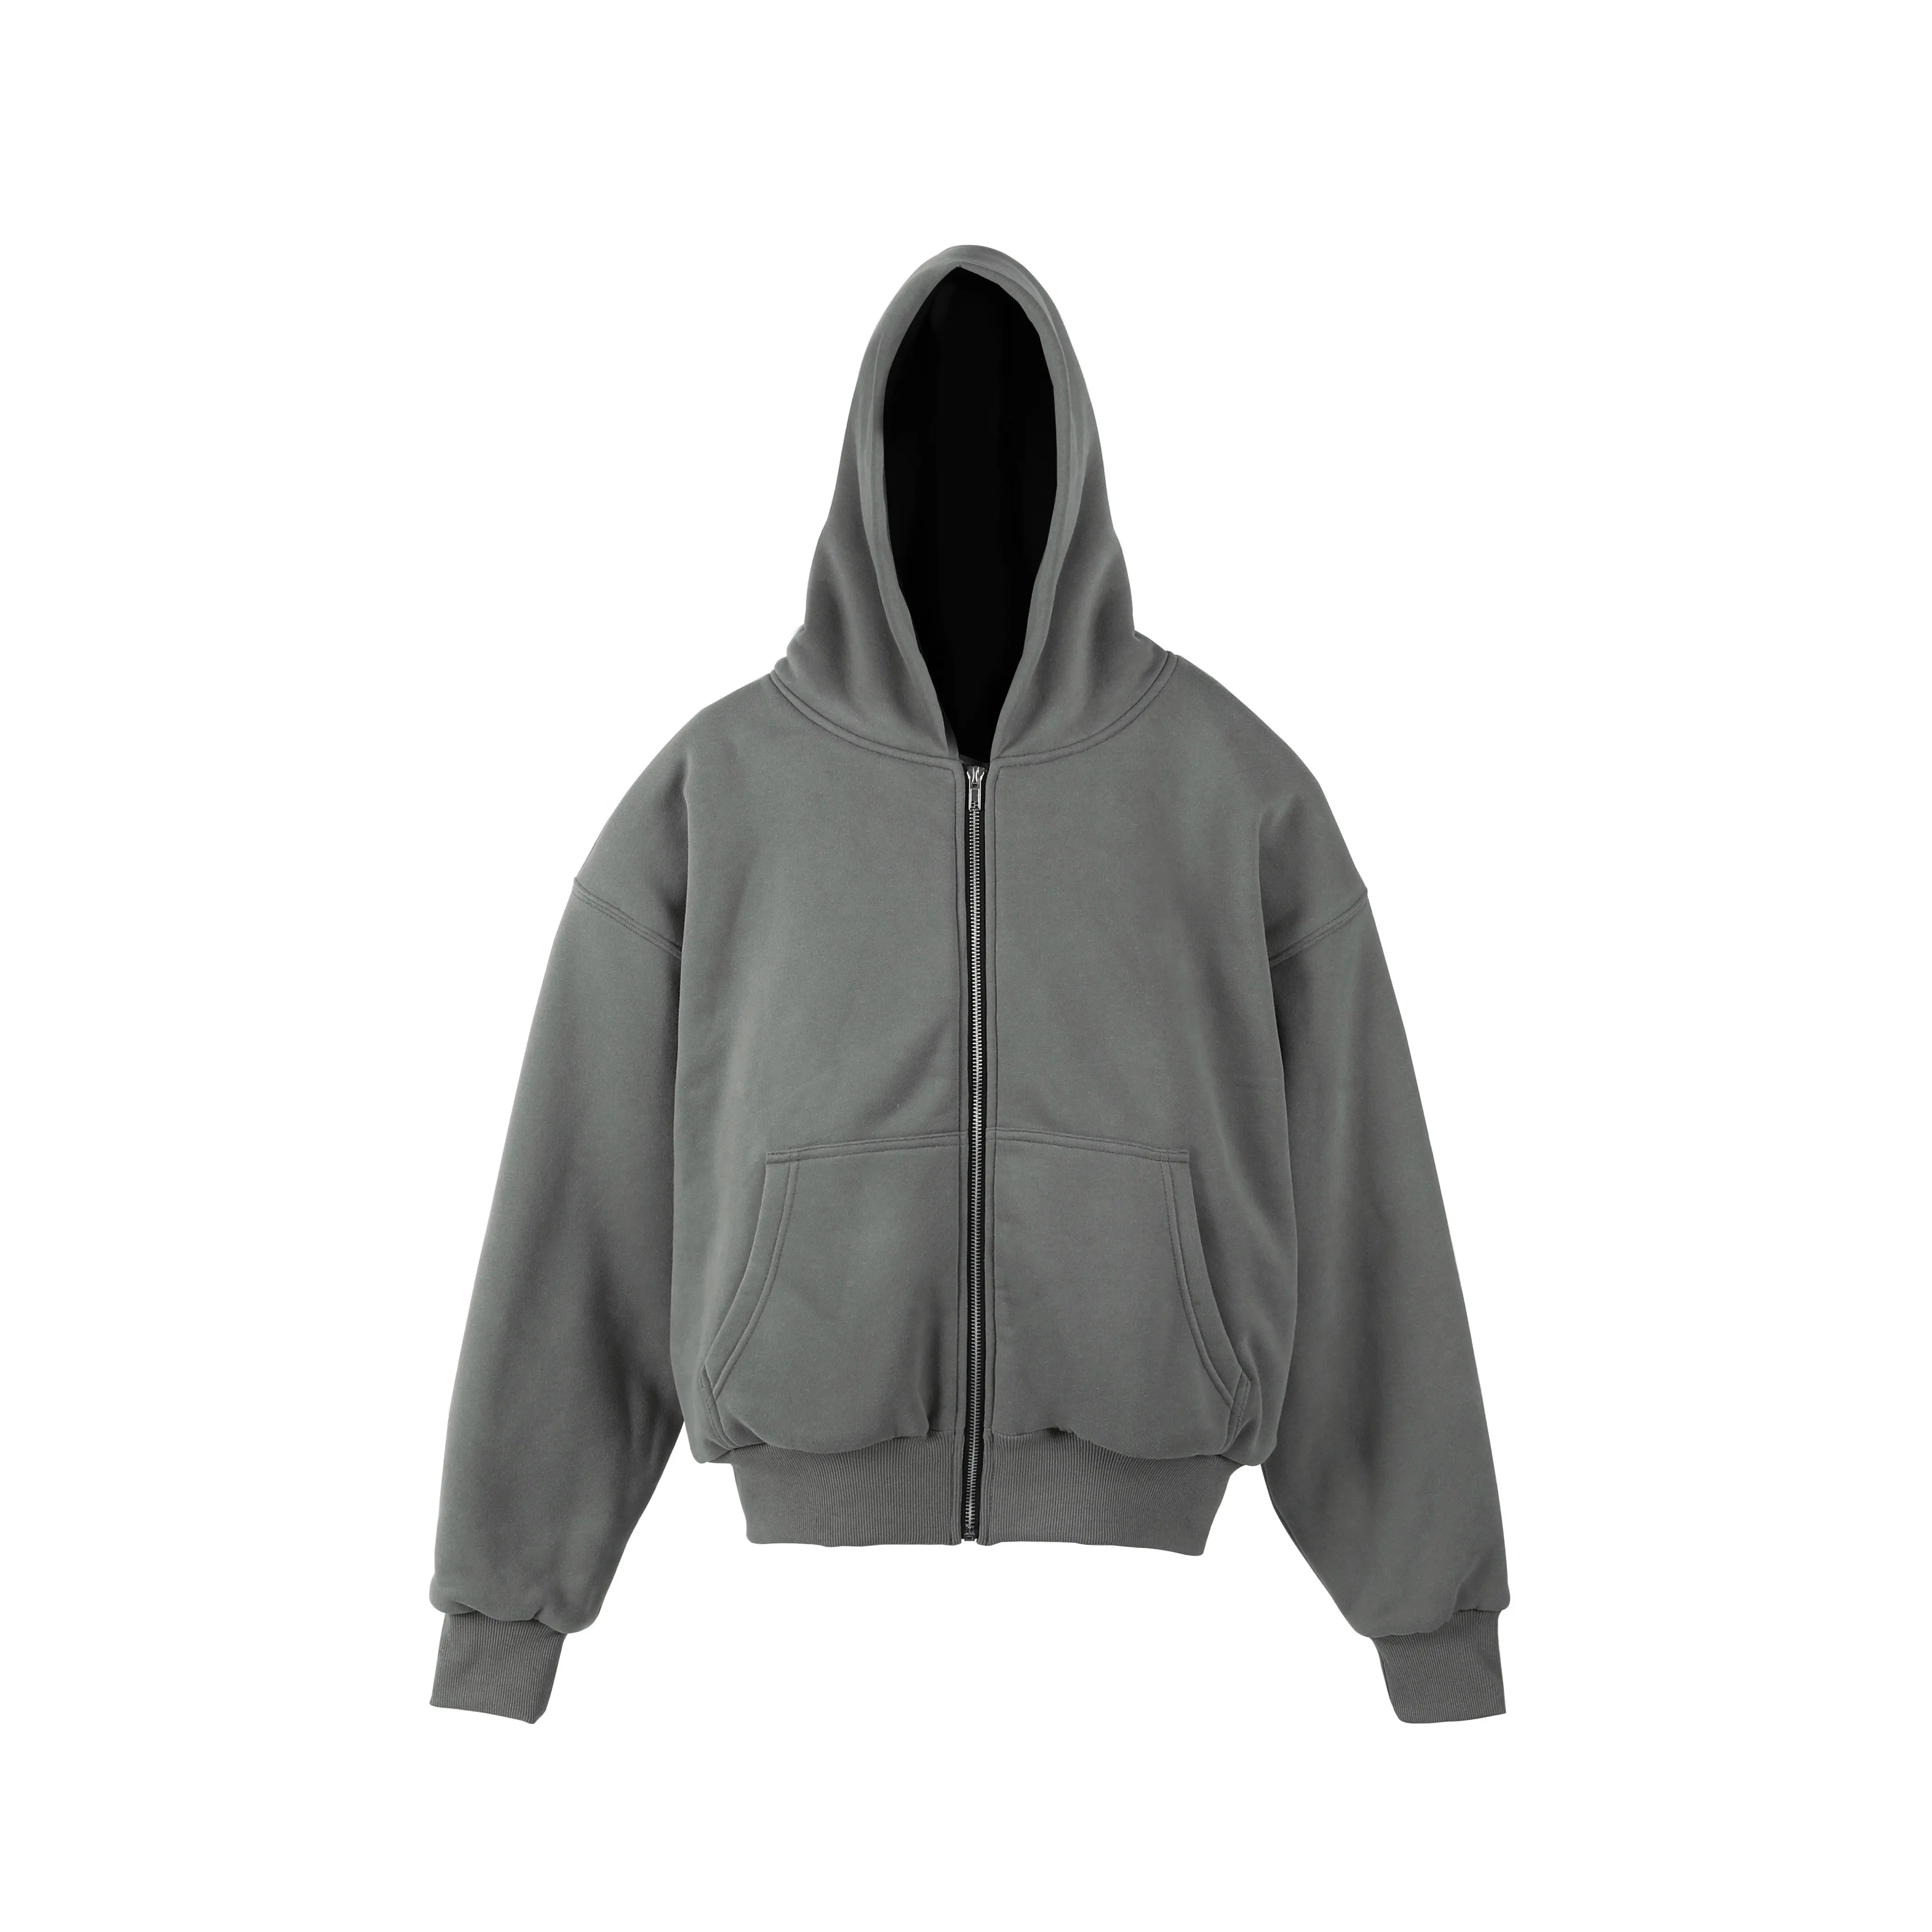 Custom Pullover Zip Up Fleece French Terry Unisex Plain Blank Solid Color Sweatshirt Double Layer Hoodies for Men